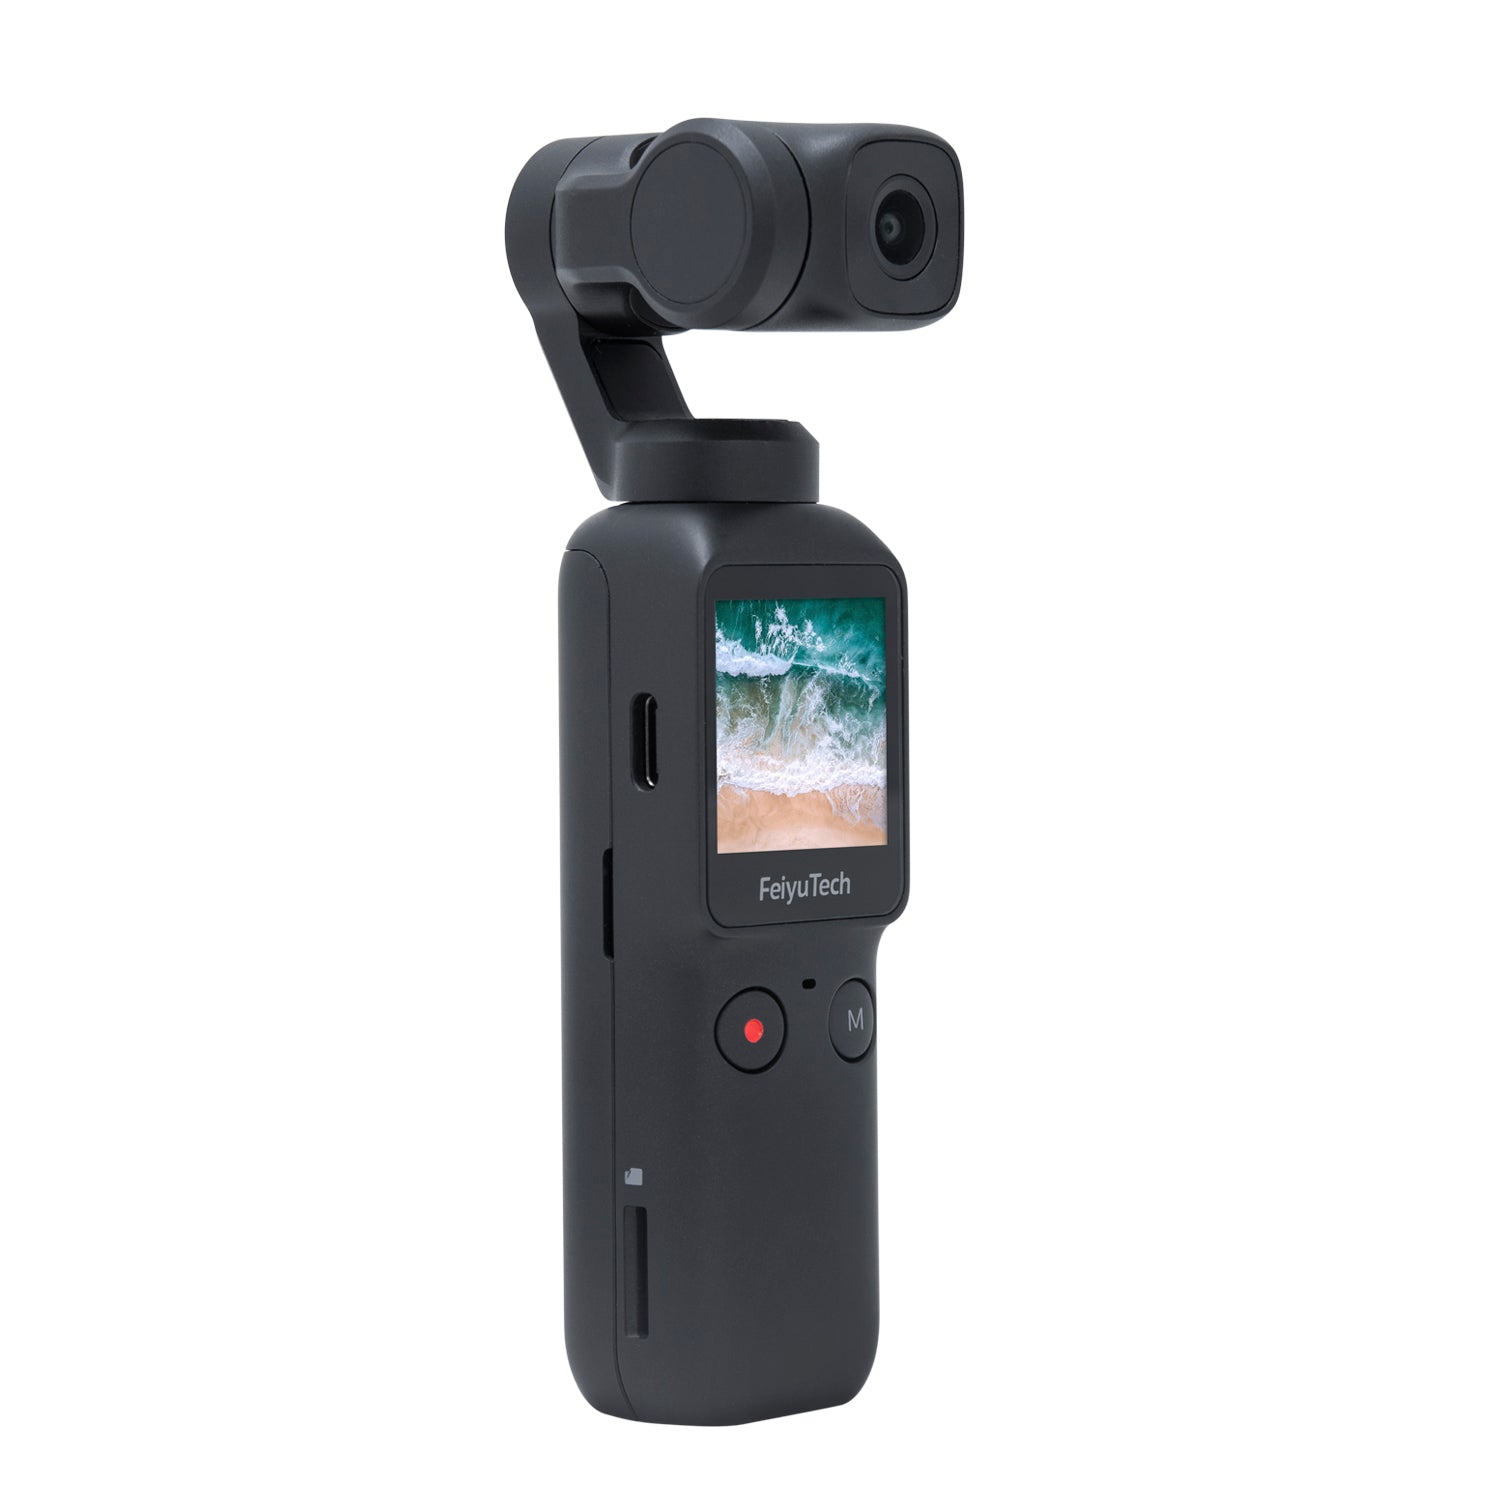 Feiyu Pocket Neue intelligente kompakte 4K 6-Achsen-Handkamera